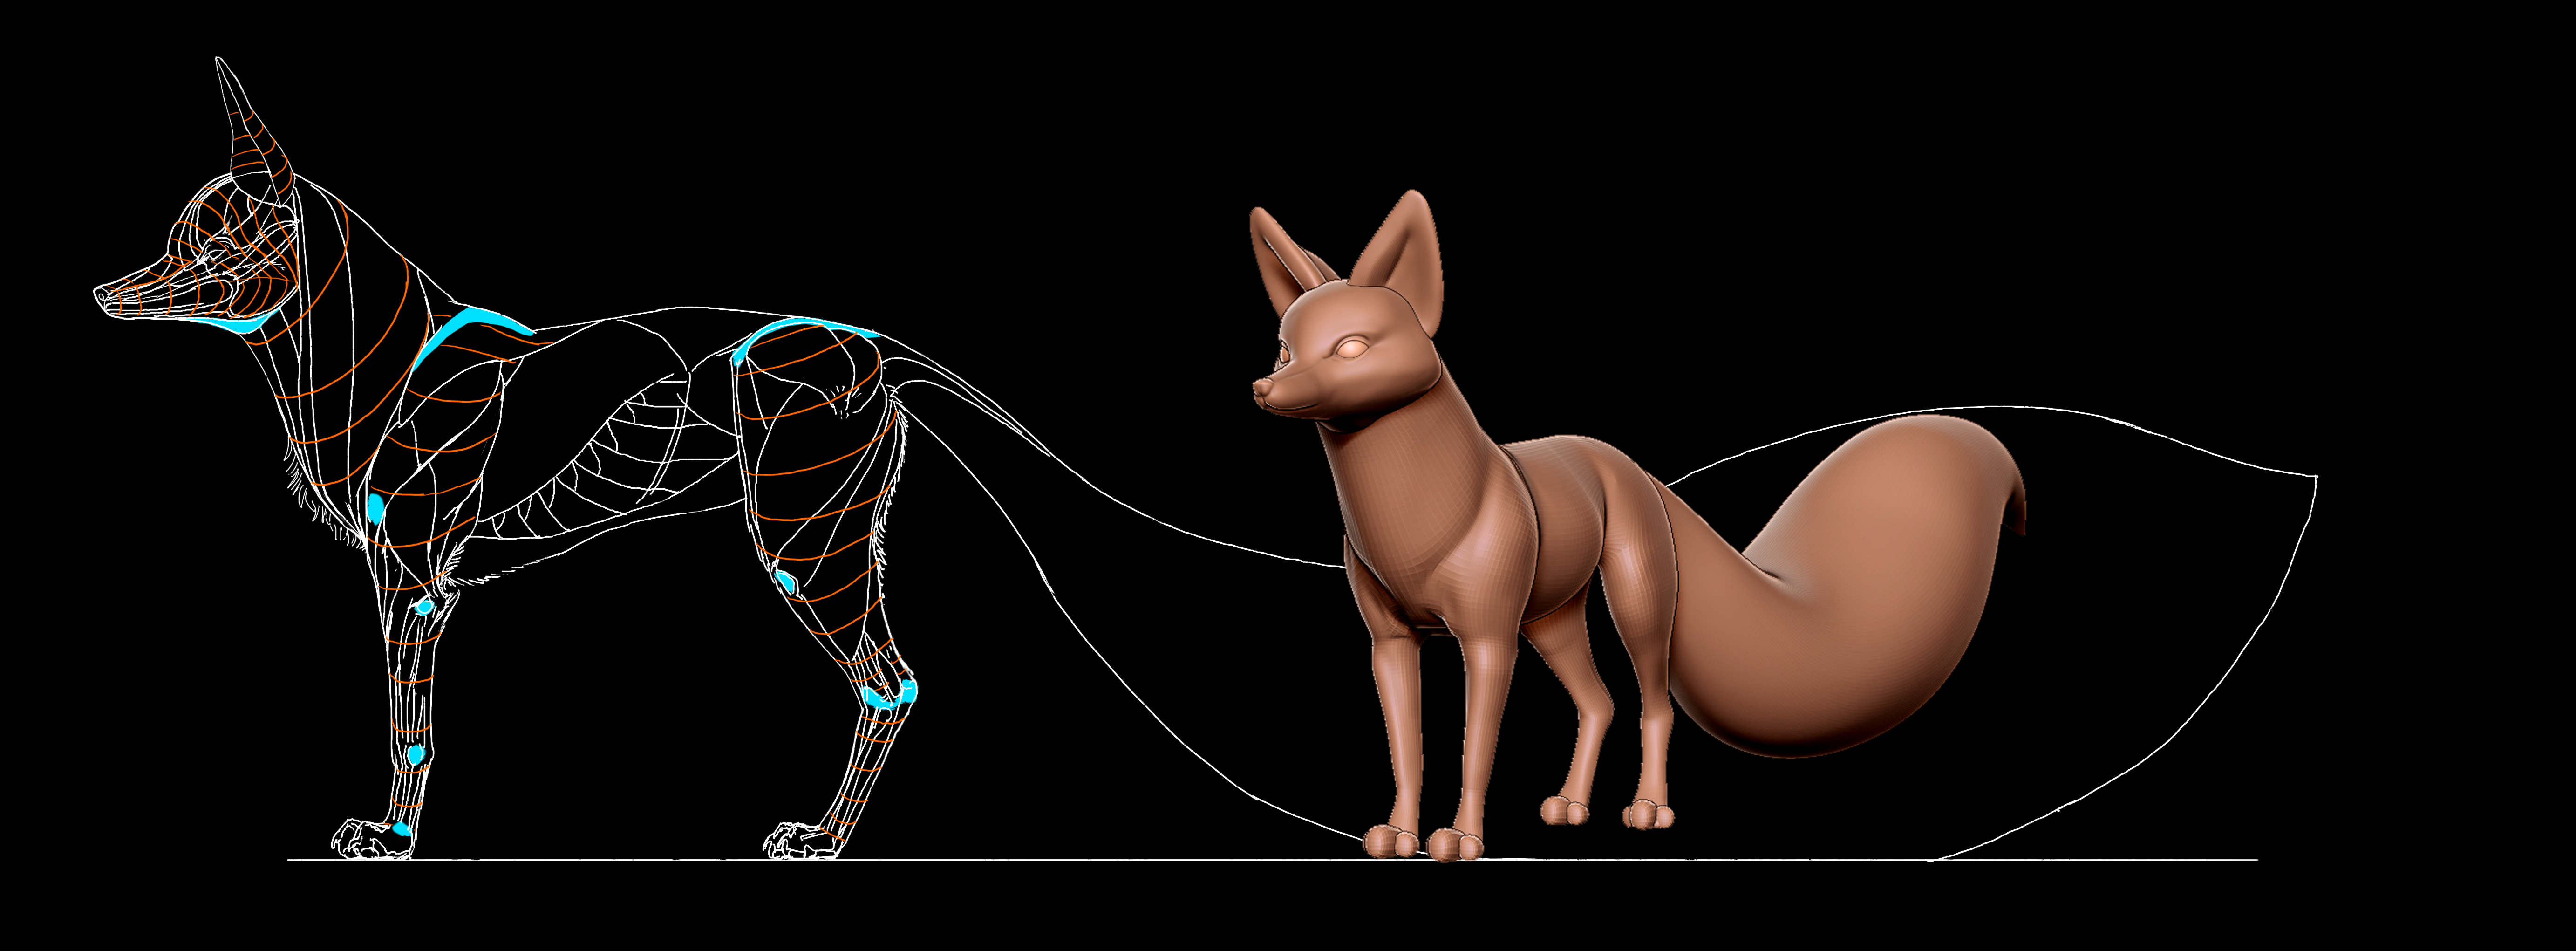 croquis digital d'un renard aux côtés du rendu final en 3D du design du renard